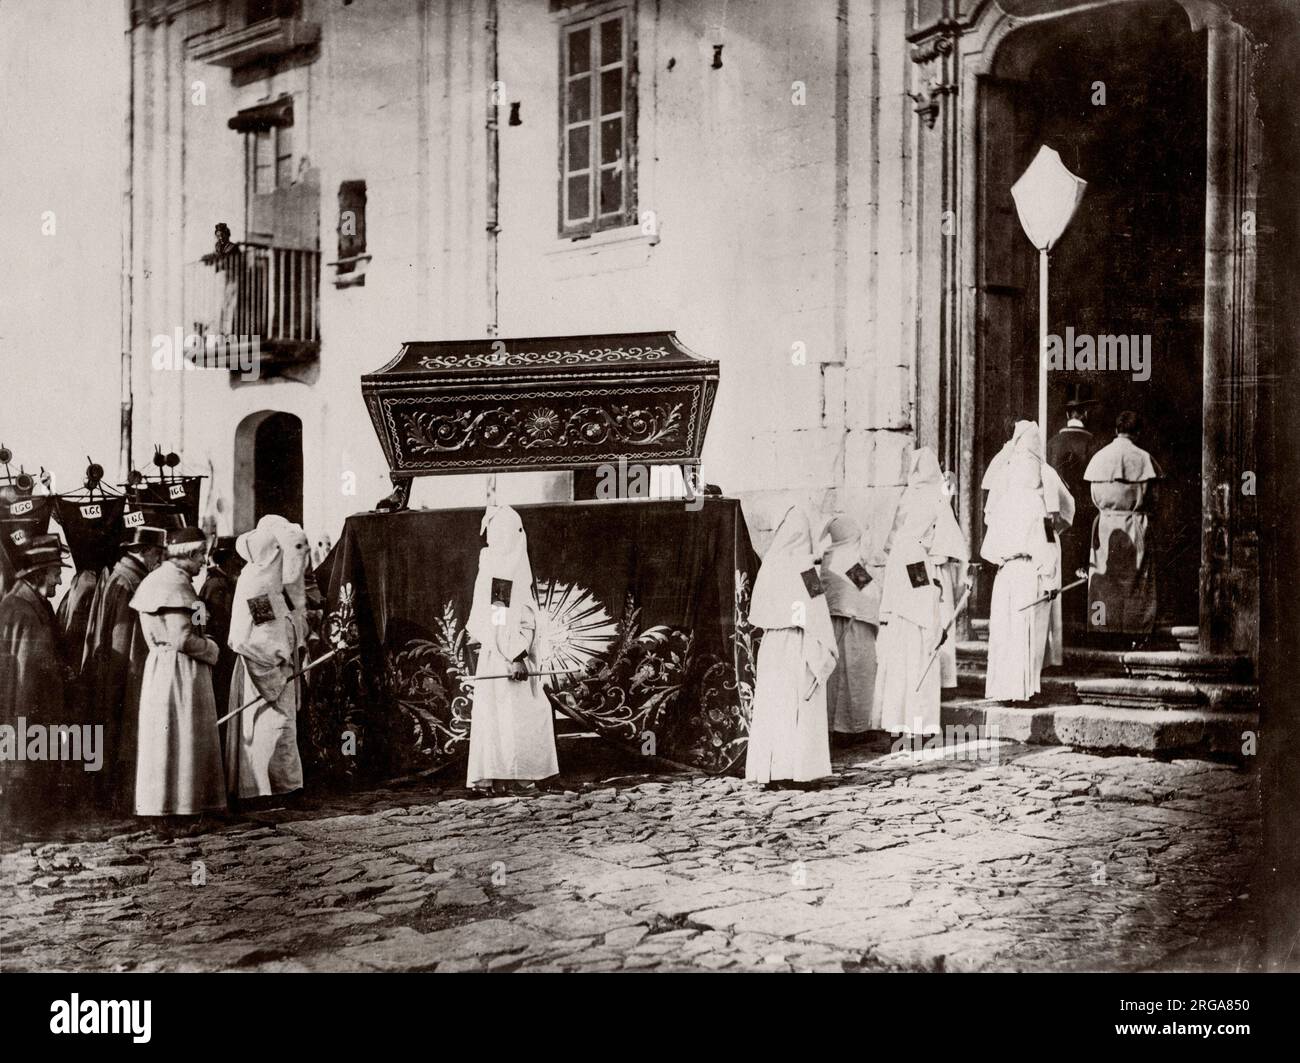 c.1880s Italy - Fratelli di Nostra Signora della Misericordia - FDM - Brotherhood of Mercy - funeral Stock Photo